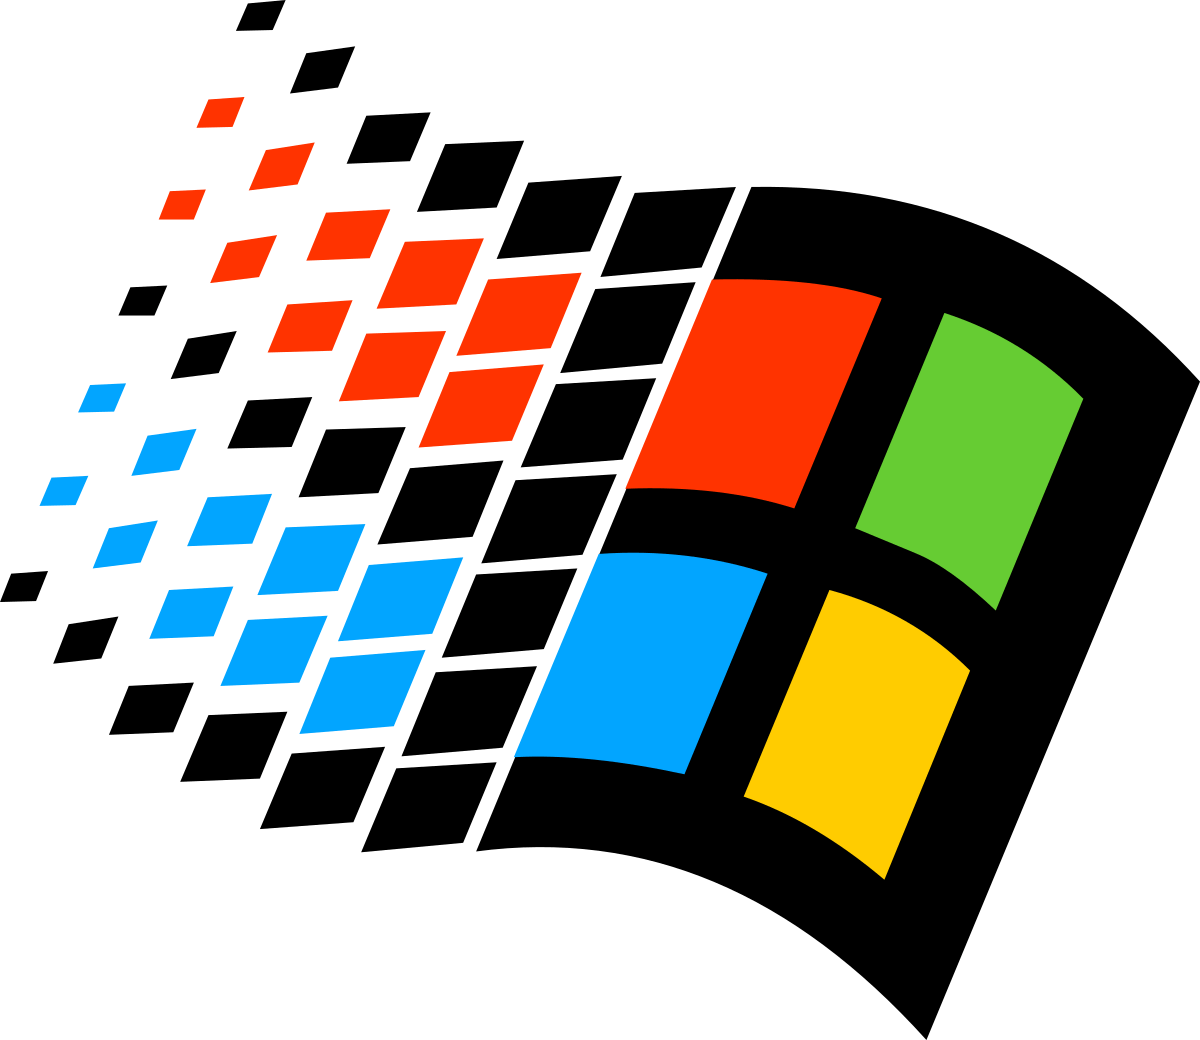 Windos Logo - Windows 95 - Simple English Wikipedia, the free encyclopedia